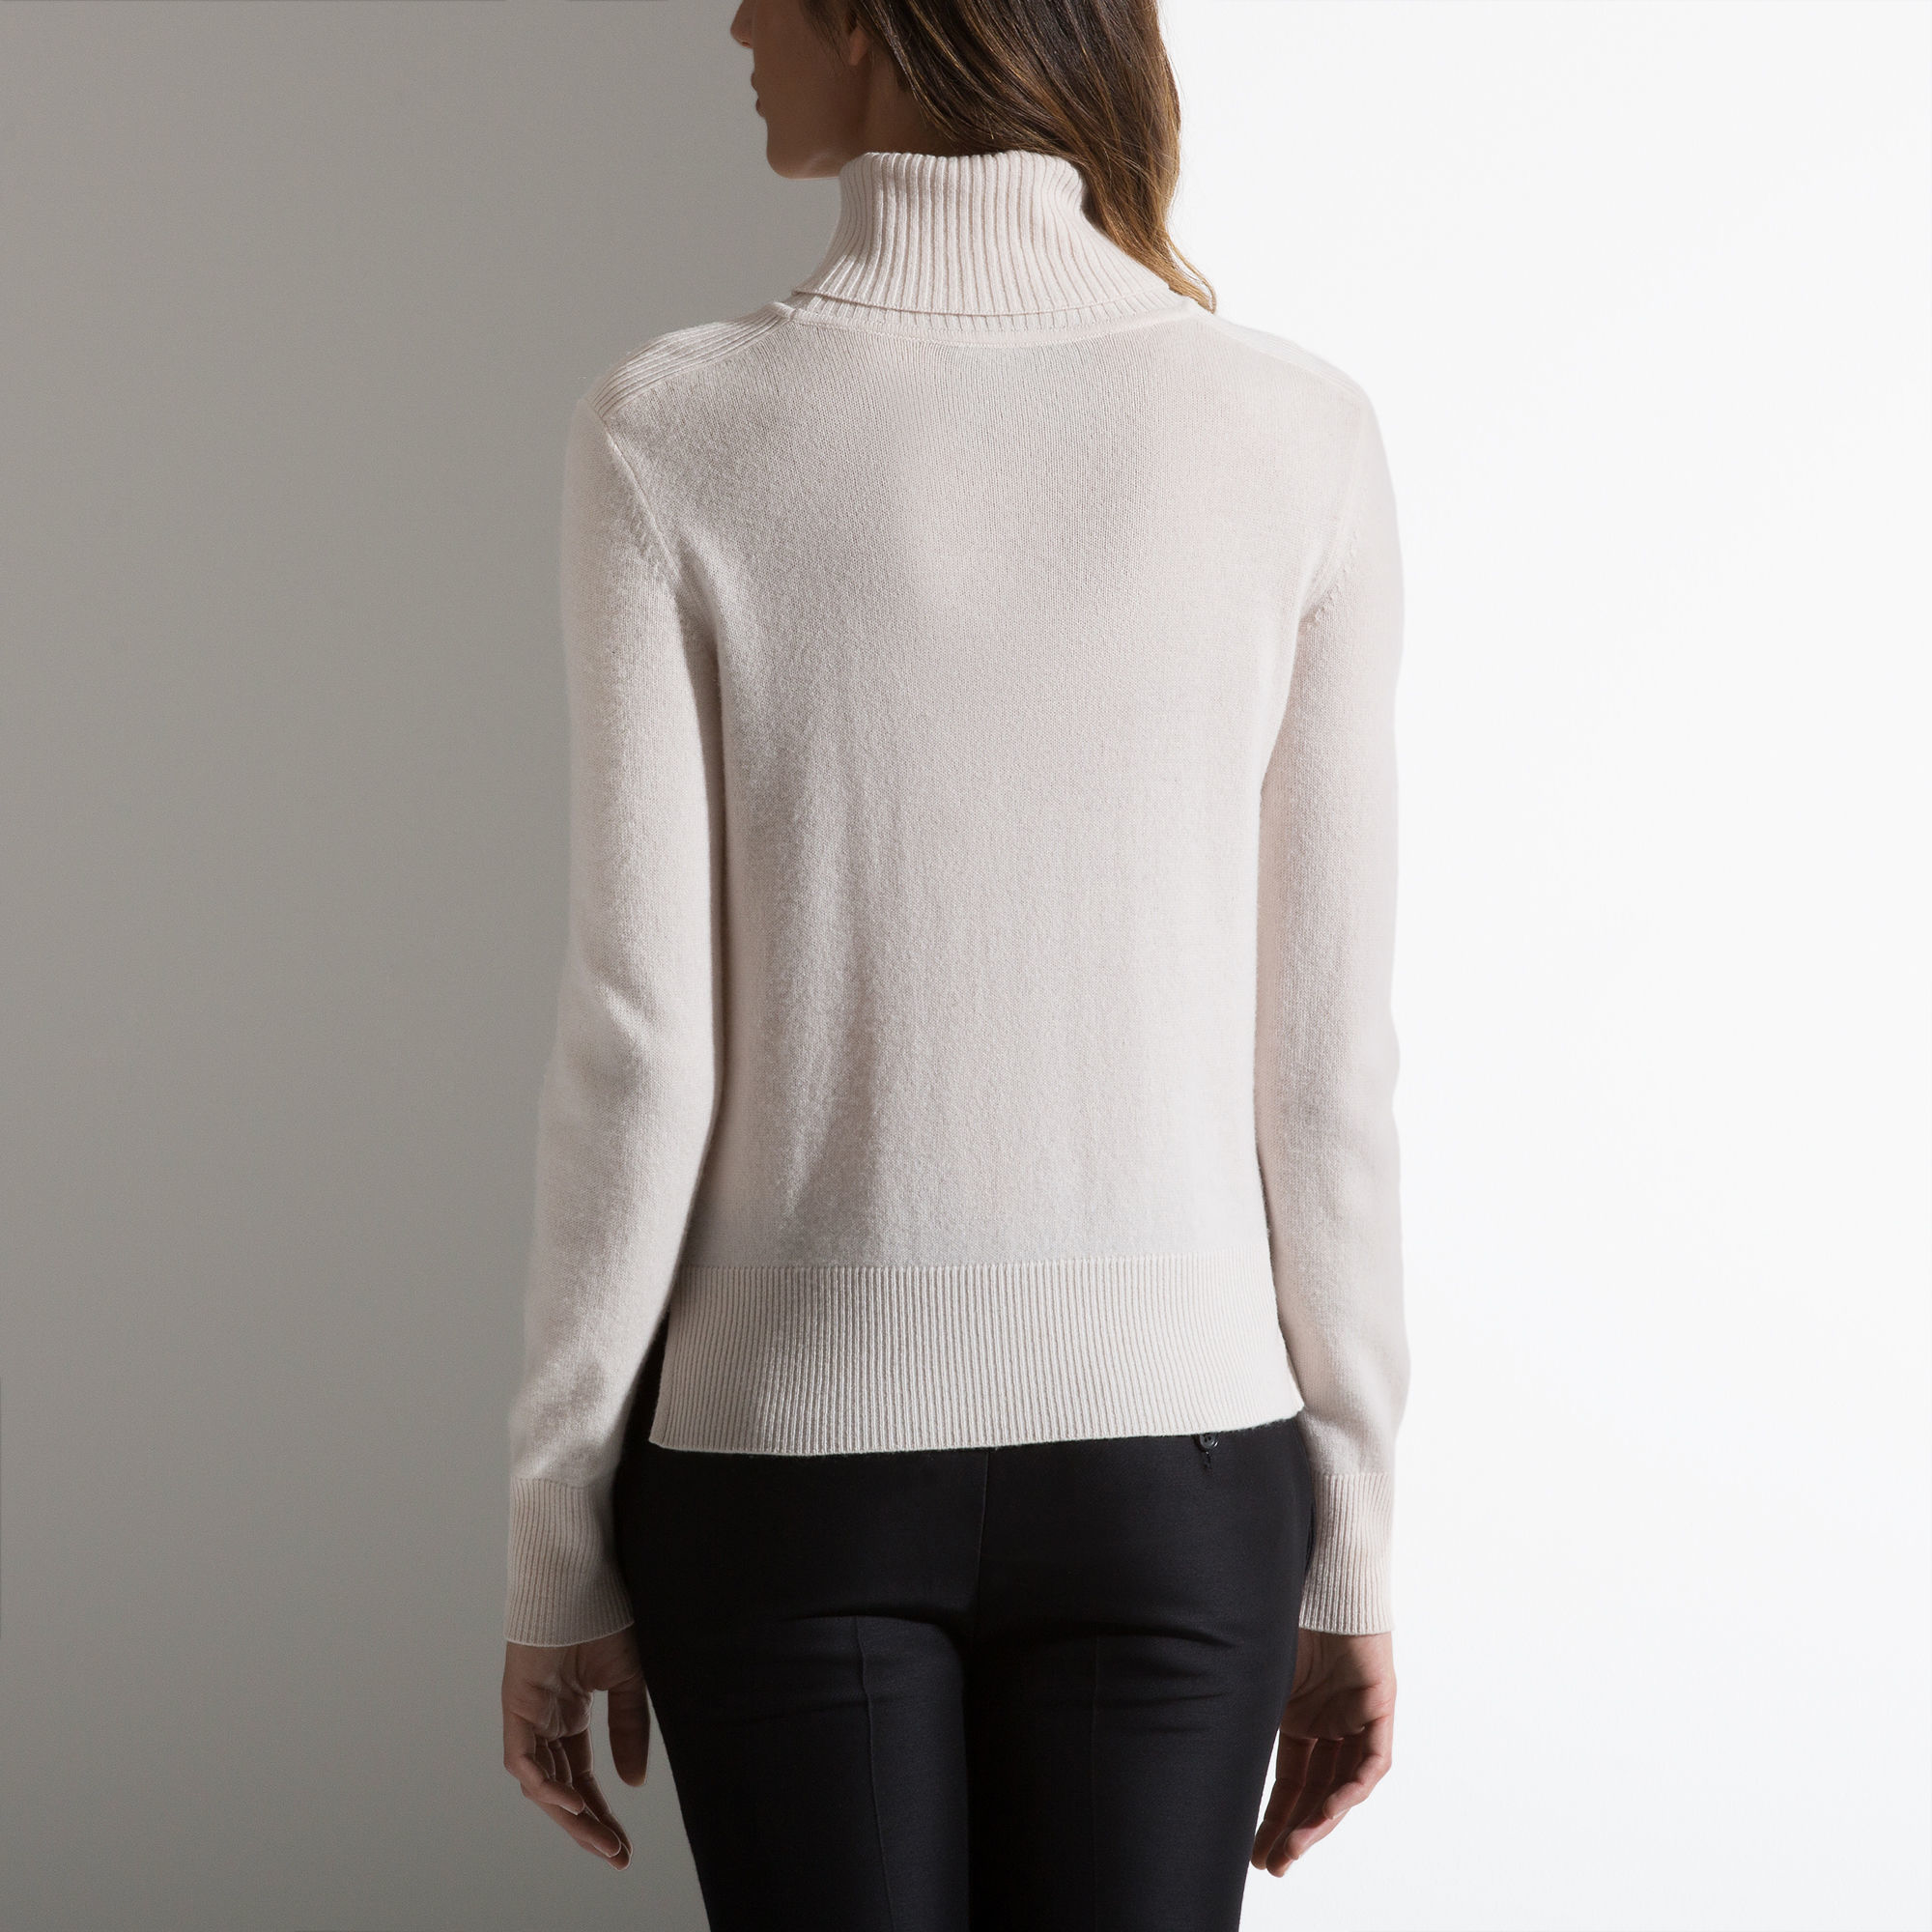 Bally Polo Neck Sweater in Bone (White) - Lyst